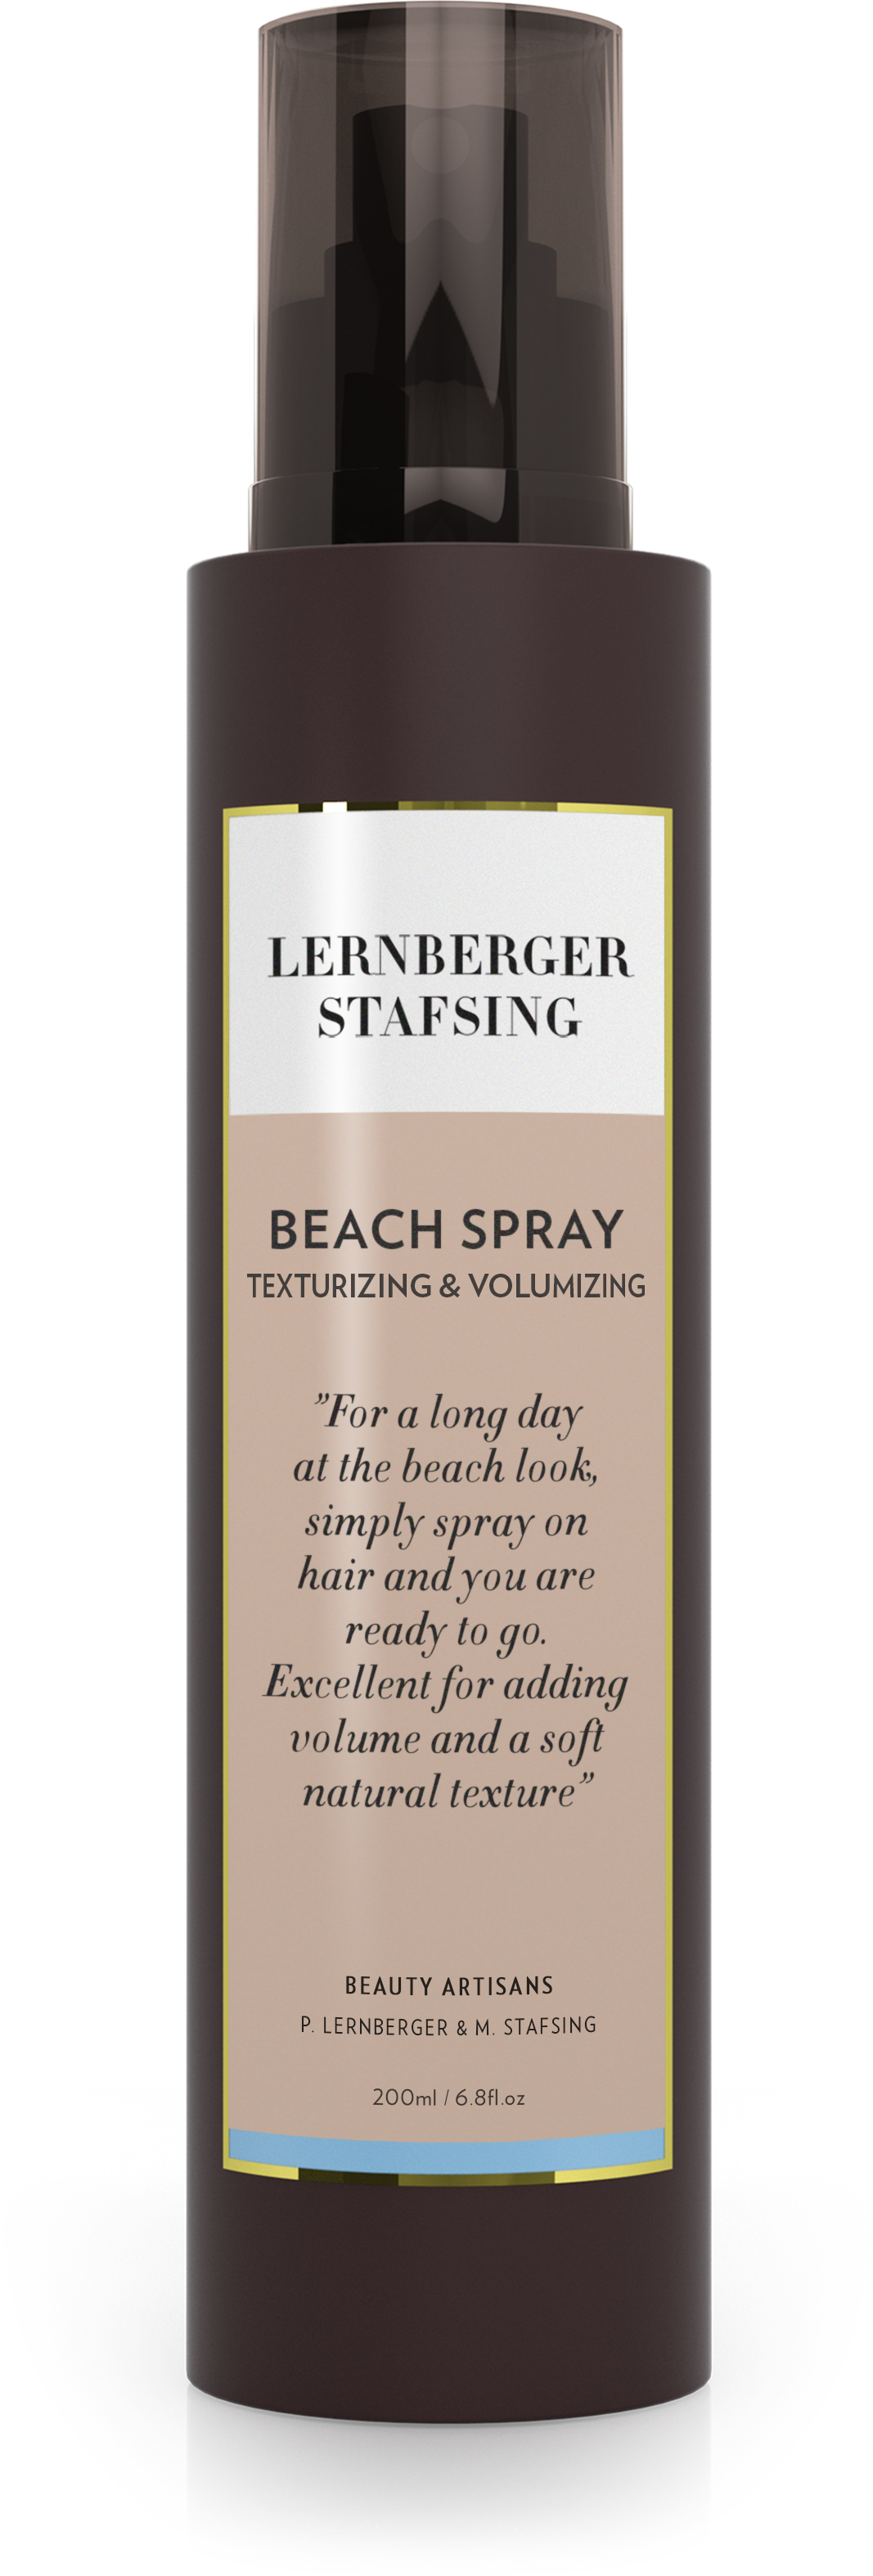 Lernberger Stafsing Beach Spray Texturizing & Volumizing